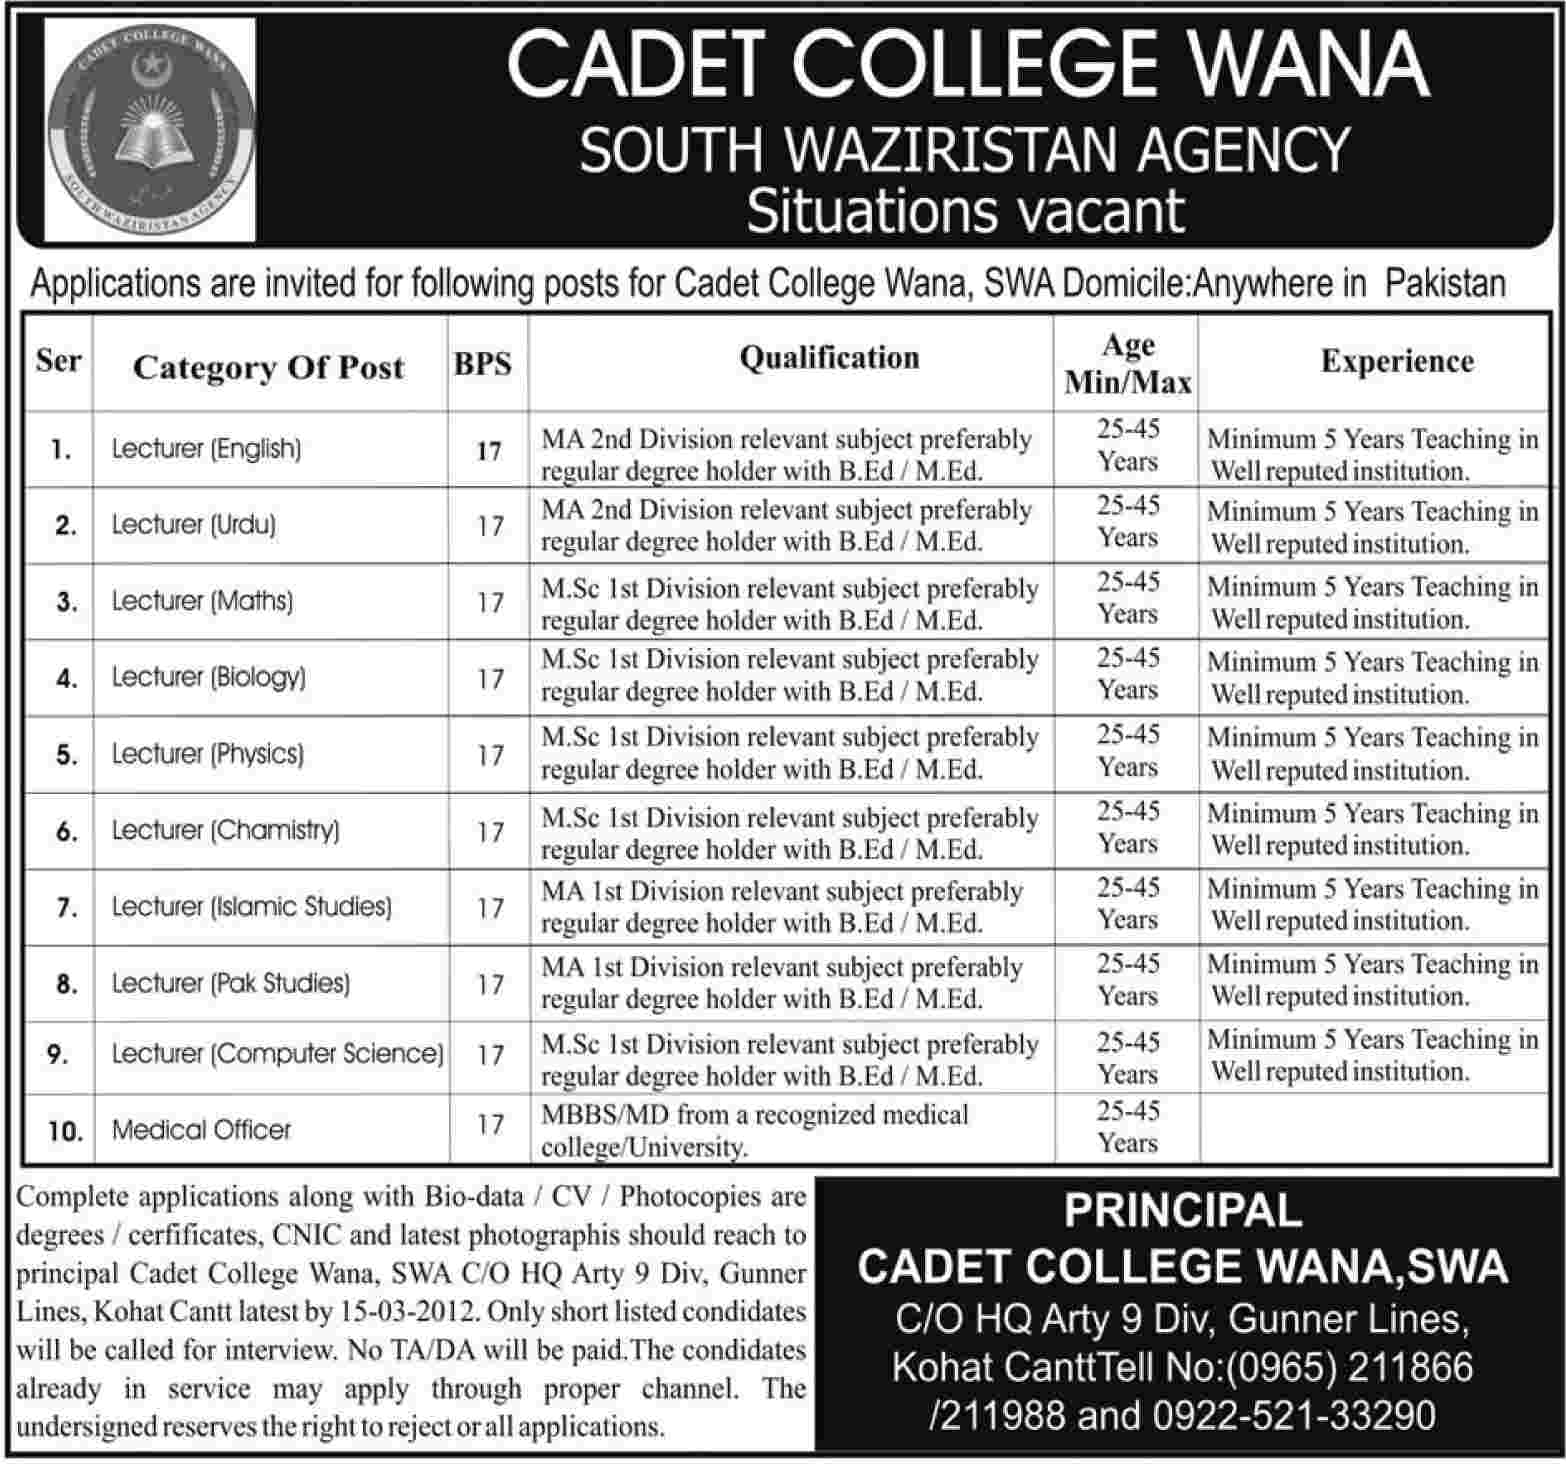 Cadet College Wana, South Waziristan Agency Jobs Opportunities